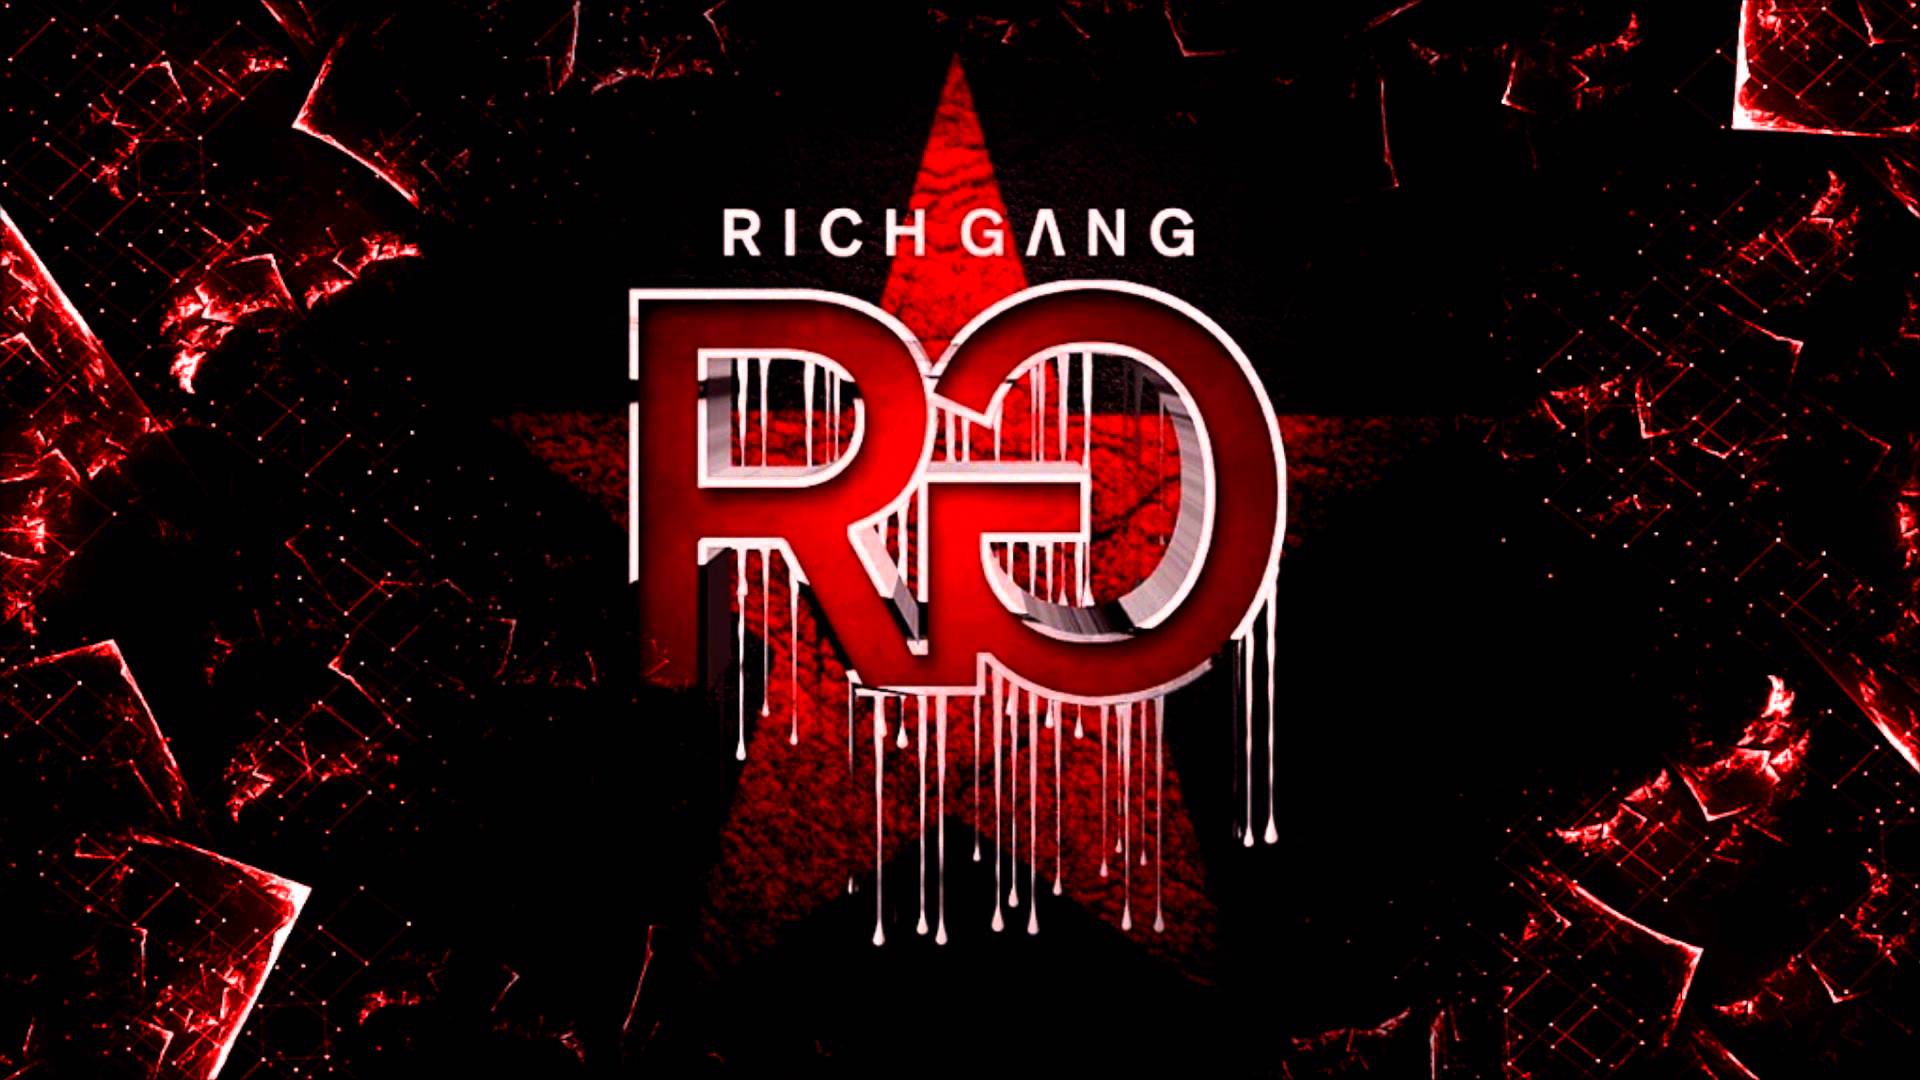 Rich Gang Logo Wallpaper Rich gang album cover 1920x1080